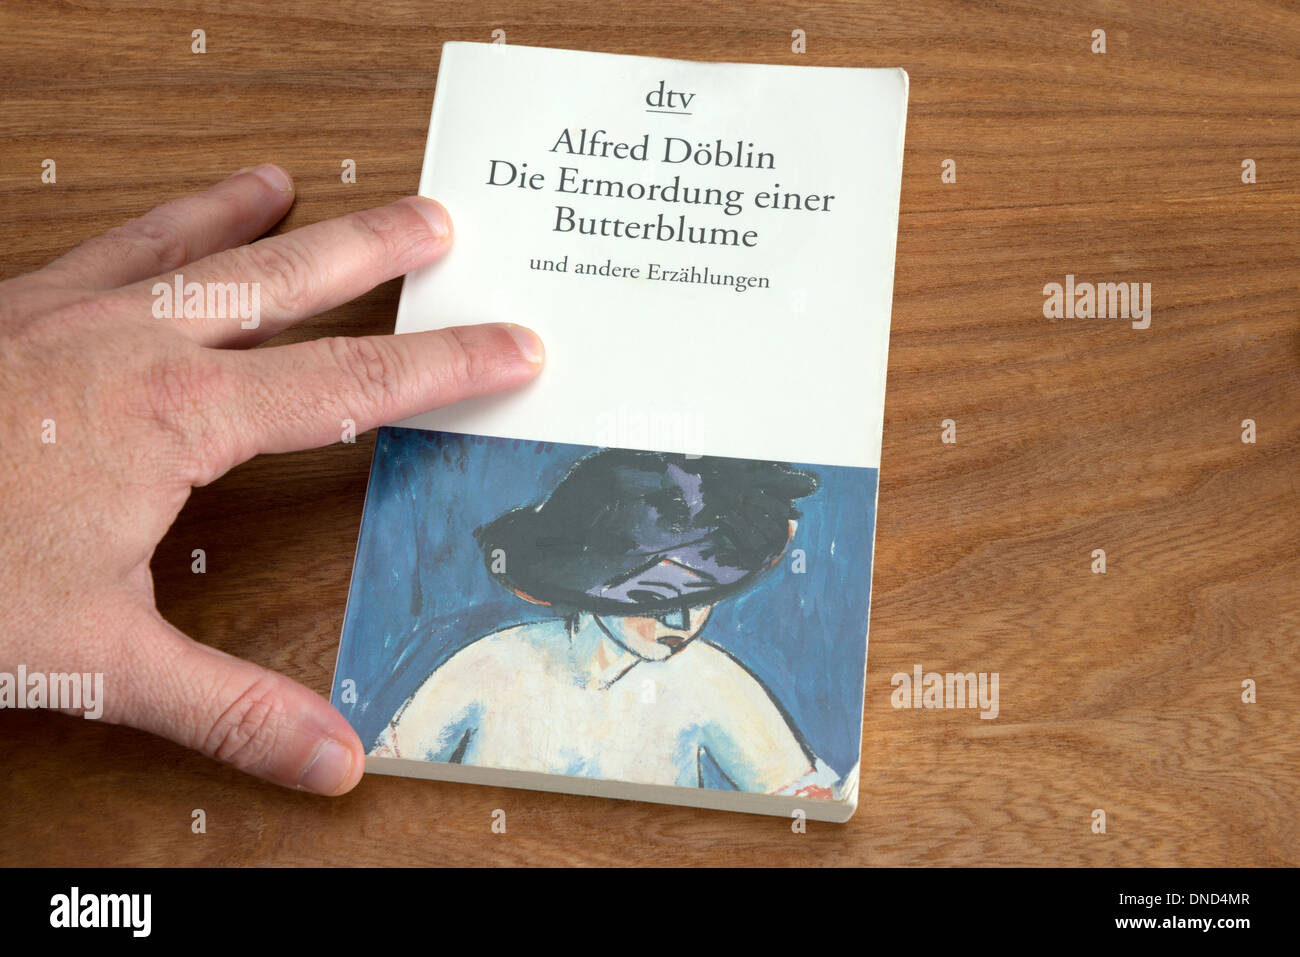 Alfred Doblin Die Ermordung einer Butterblume paperback novel Stock Photo